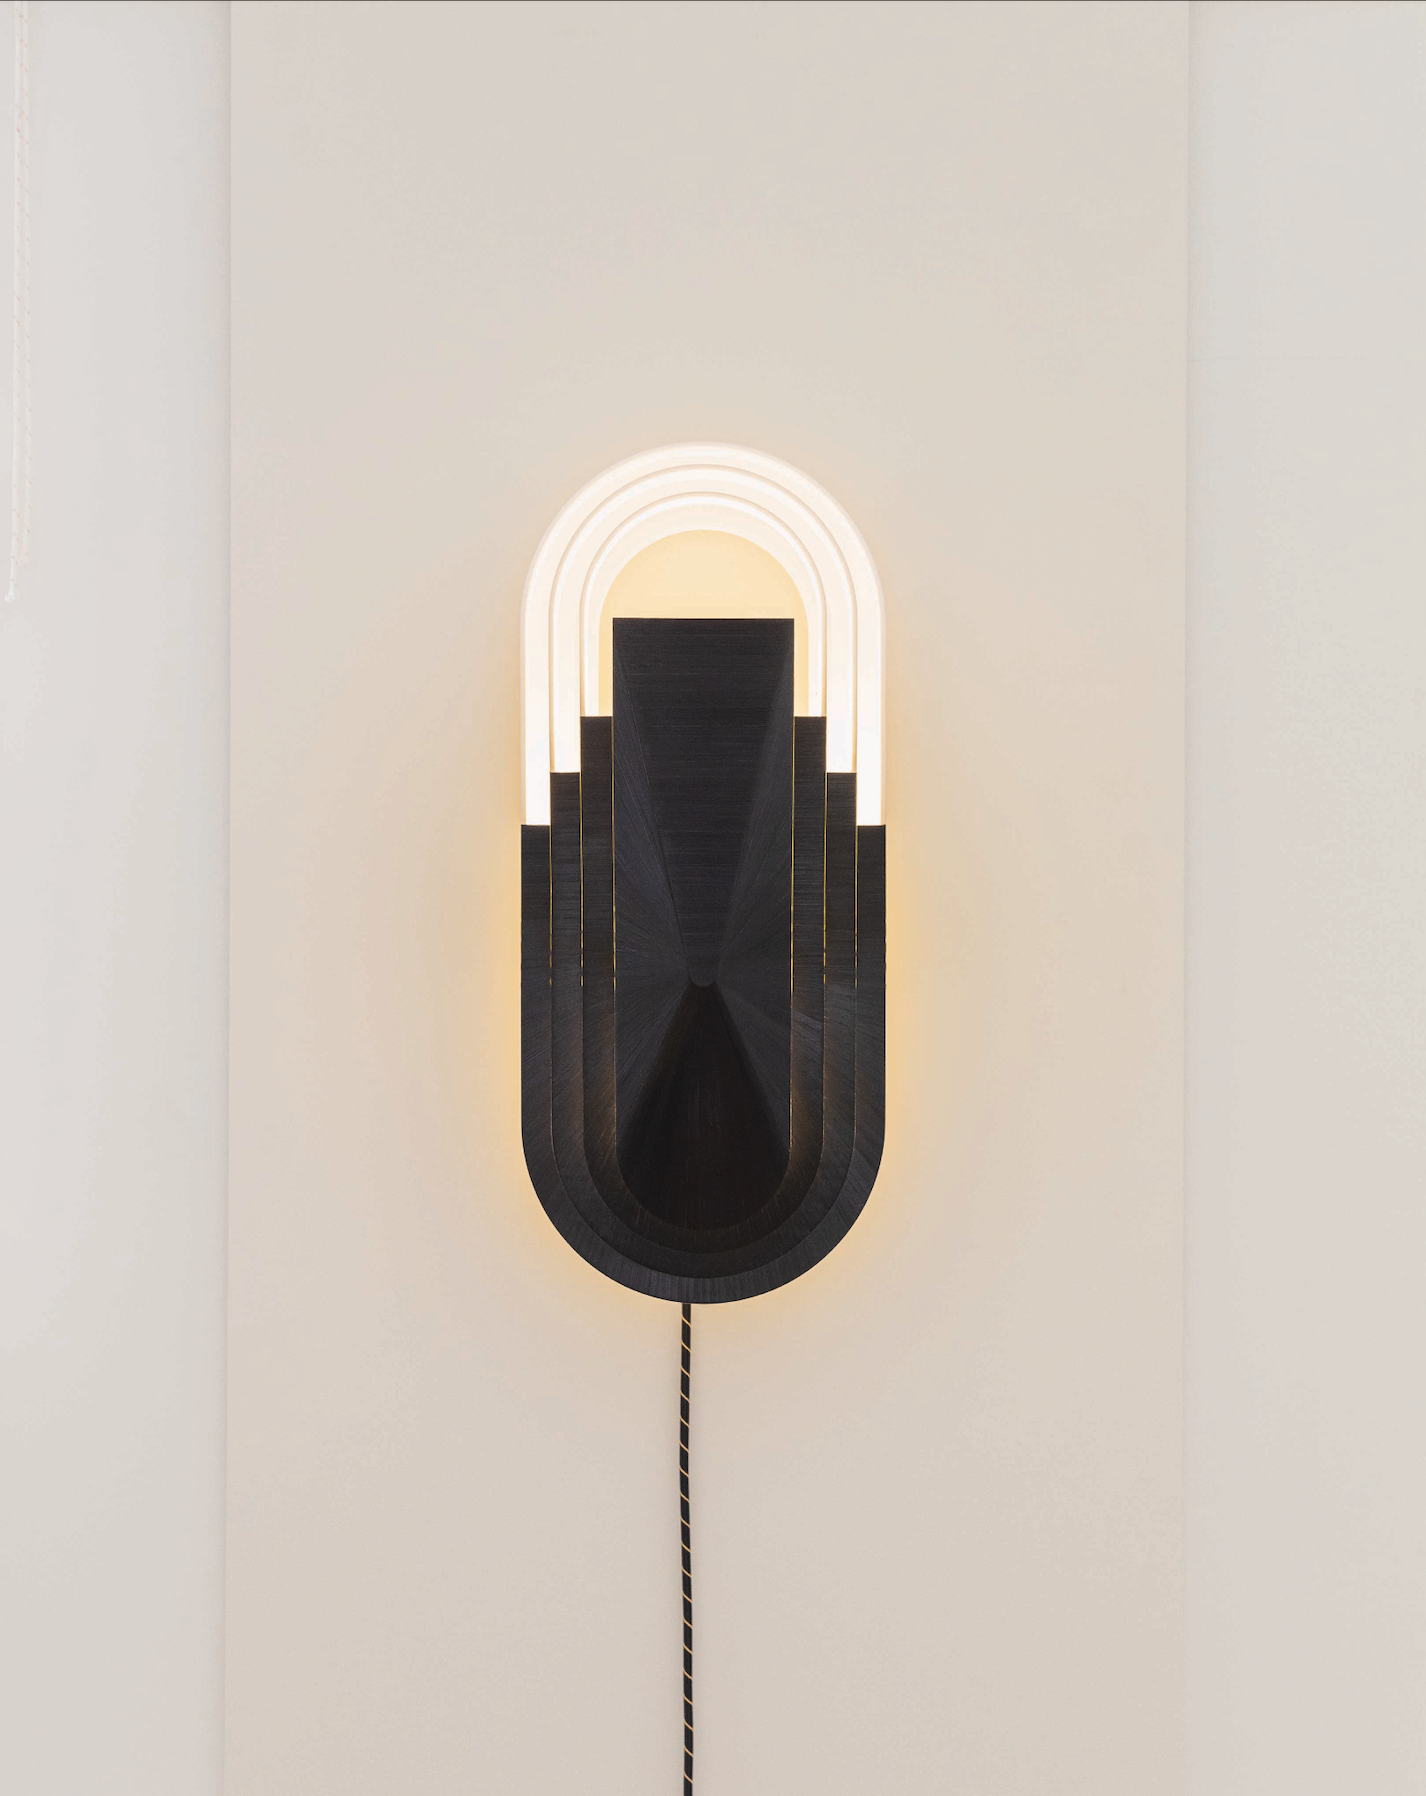 Atelier Paelis & Grégoire Floquet - The Gradium wall lamp